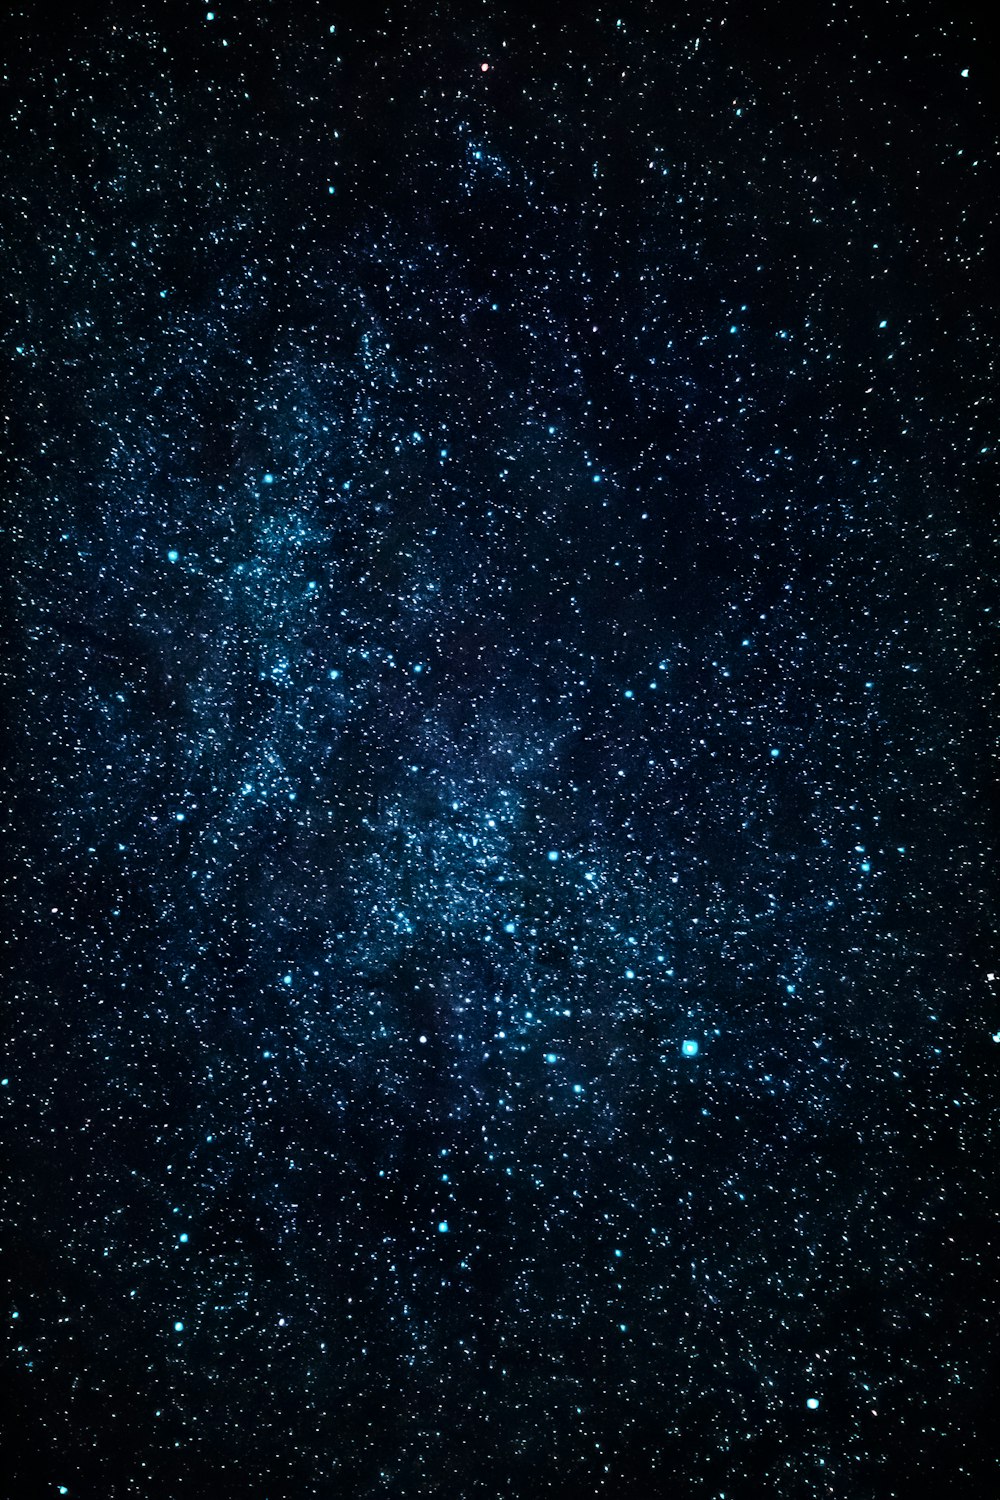 clear night sky photo – Free Astronomy Image on Unsplash